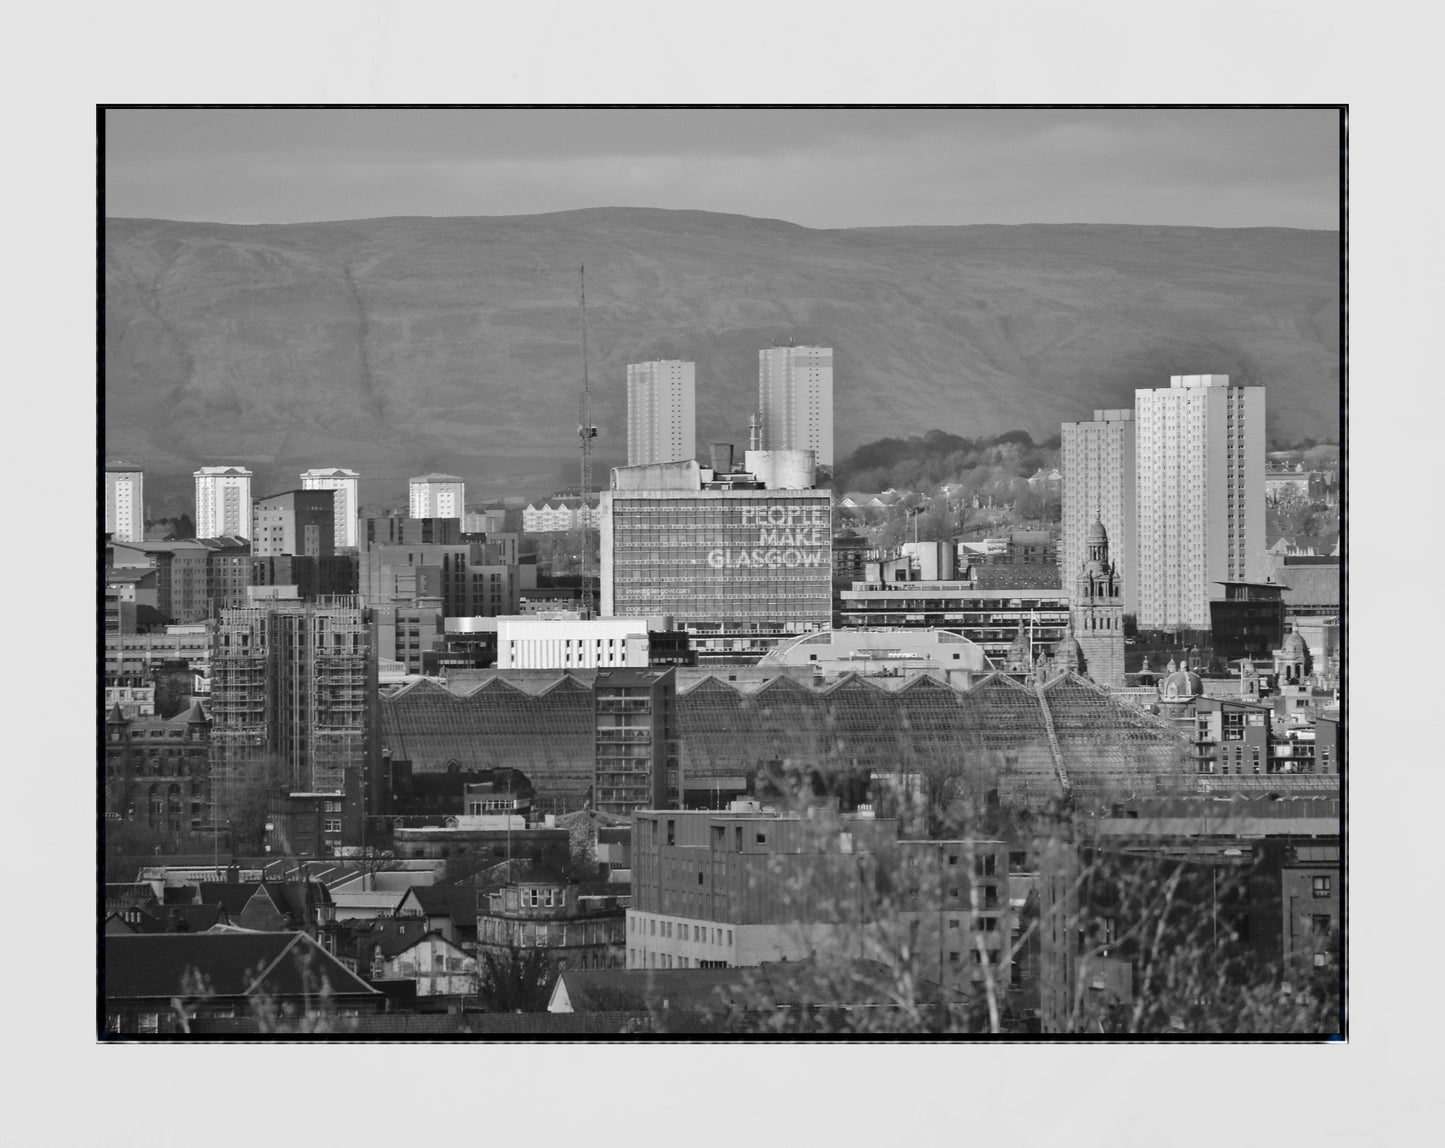 People Make Glasgow Skyline Black And White Photography Print